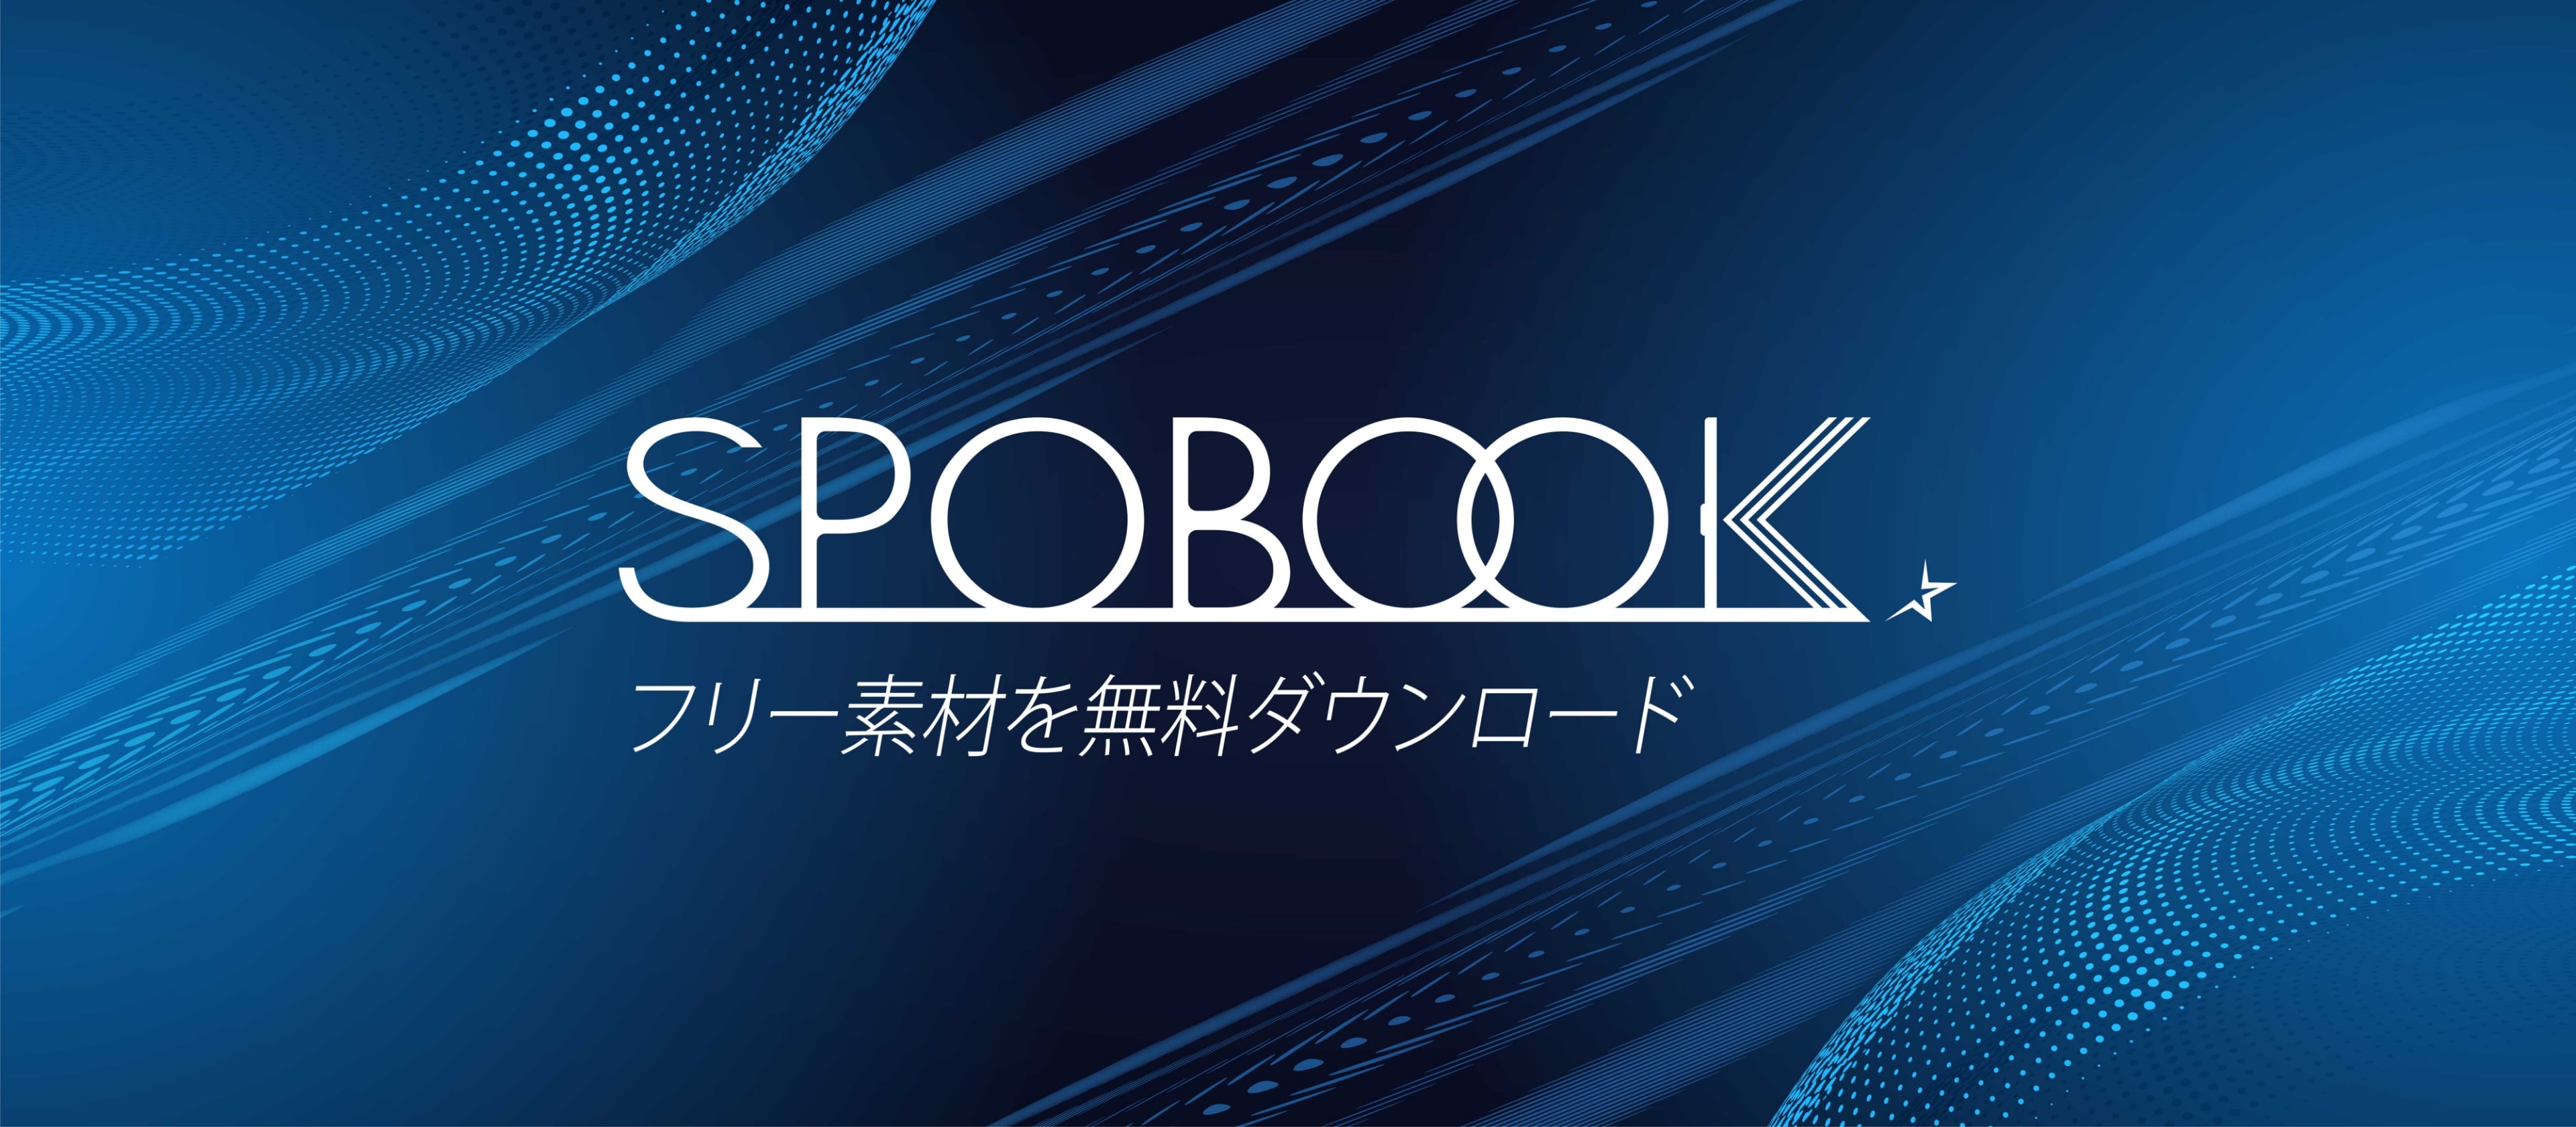 SPOBOOK フリー素材を無料ダウンロード